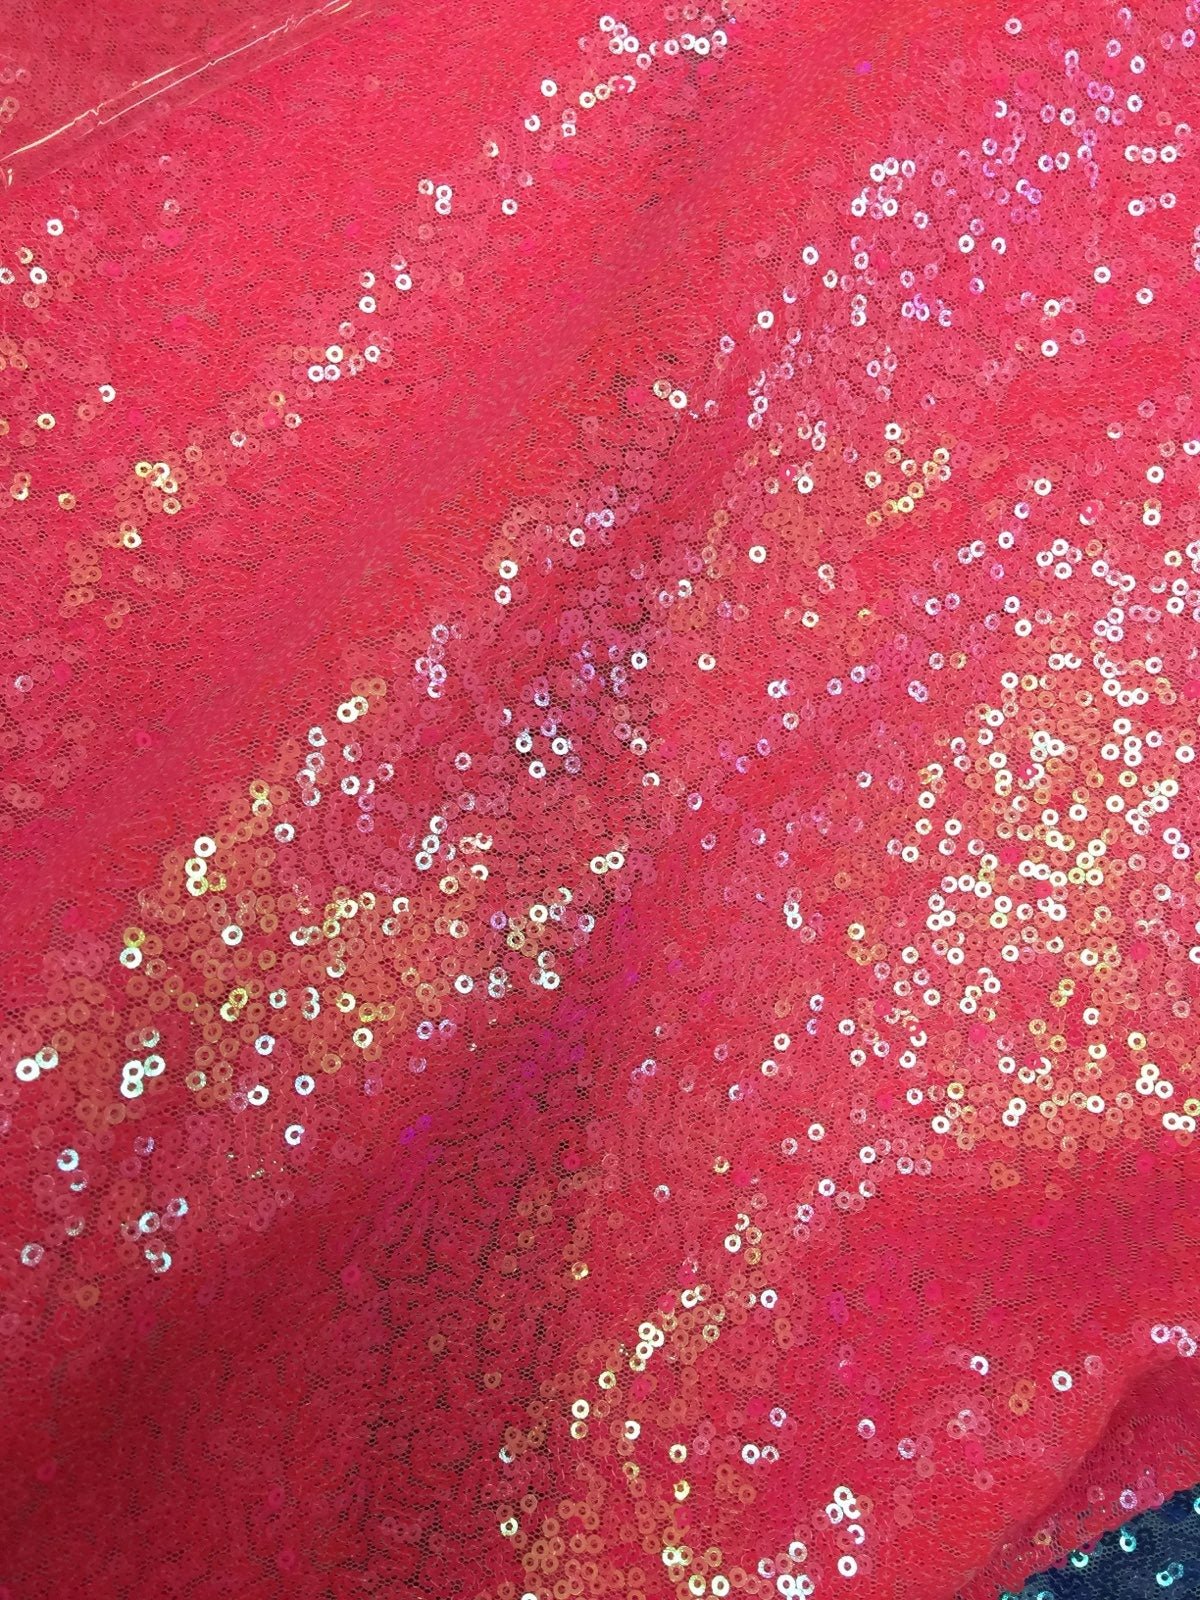 All Over Pink Iridescent Mesh Glitz Mini Sequins FabricICE FABRICSICE FABRICSPer YardAll Over Pink Iridescent Mesh Glitz Mini Sequins Fabric ICE FABRICS